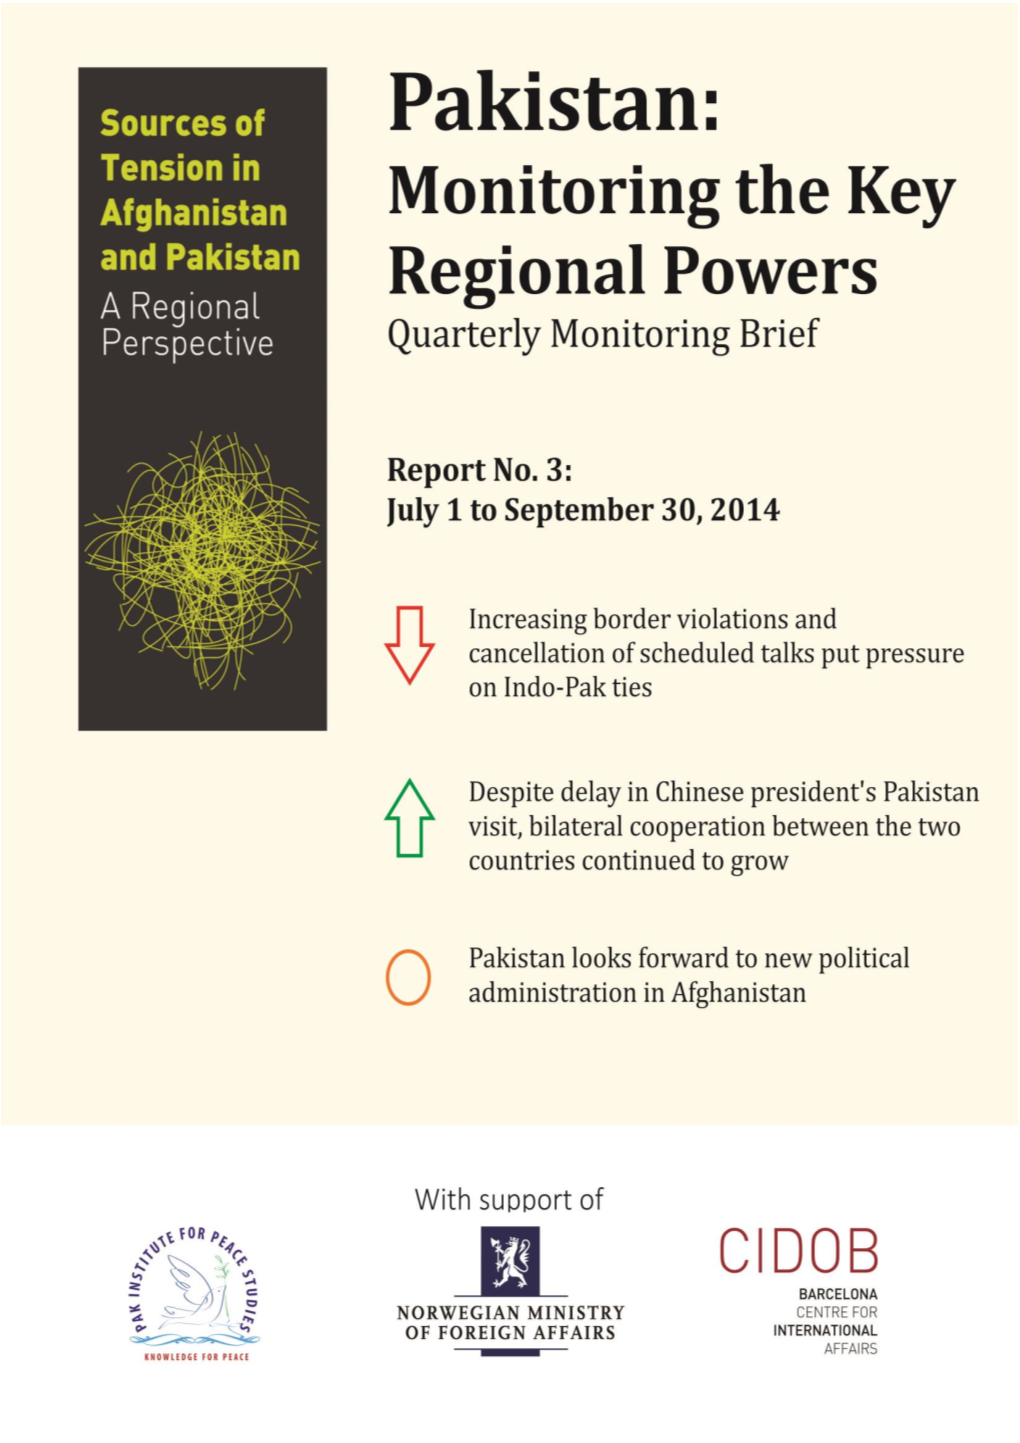 Pakistan: Monitoring the Key Regional Powers (No 3)